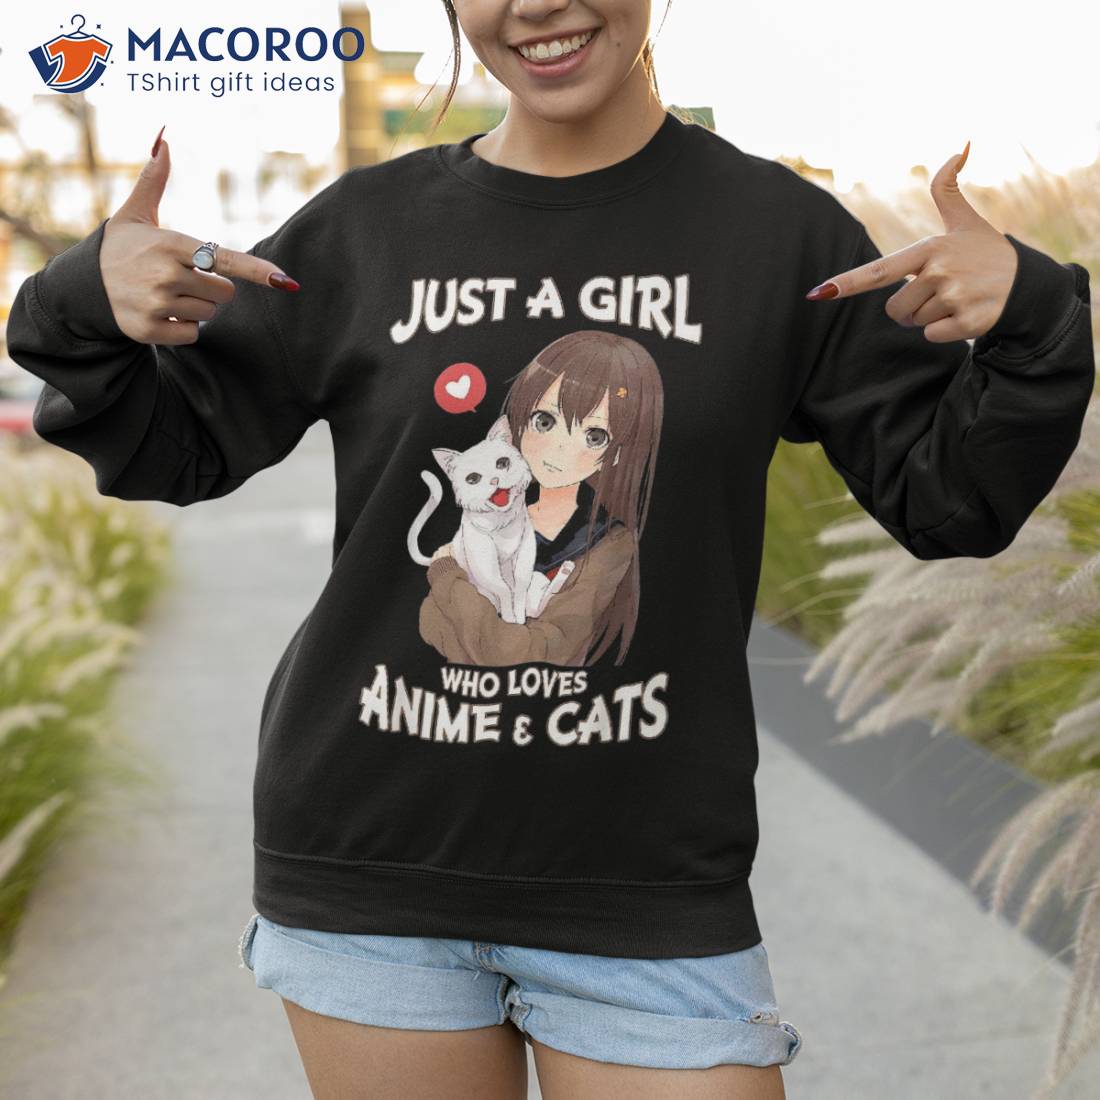 Custom Teen Girls Anime Merch Just A Girl Who Loves Anime Gifts